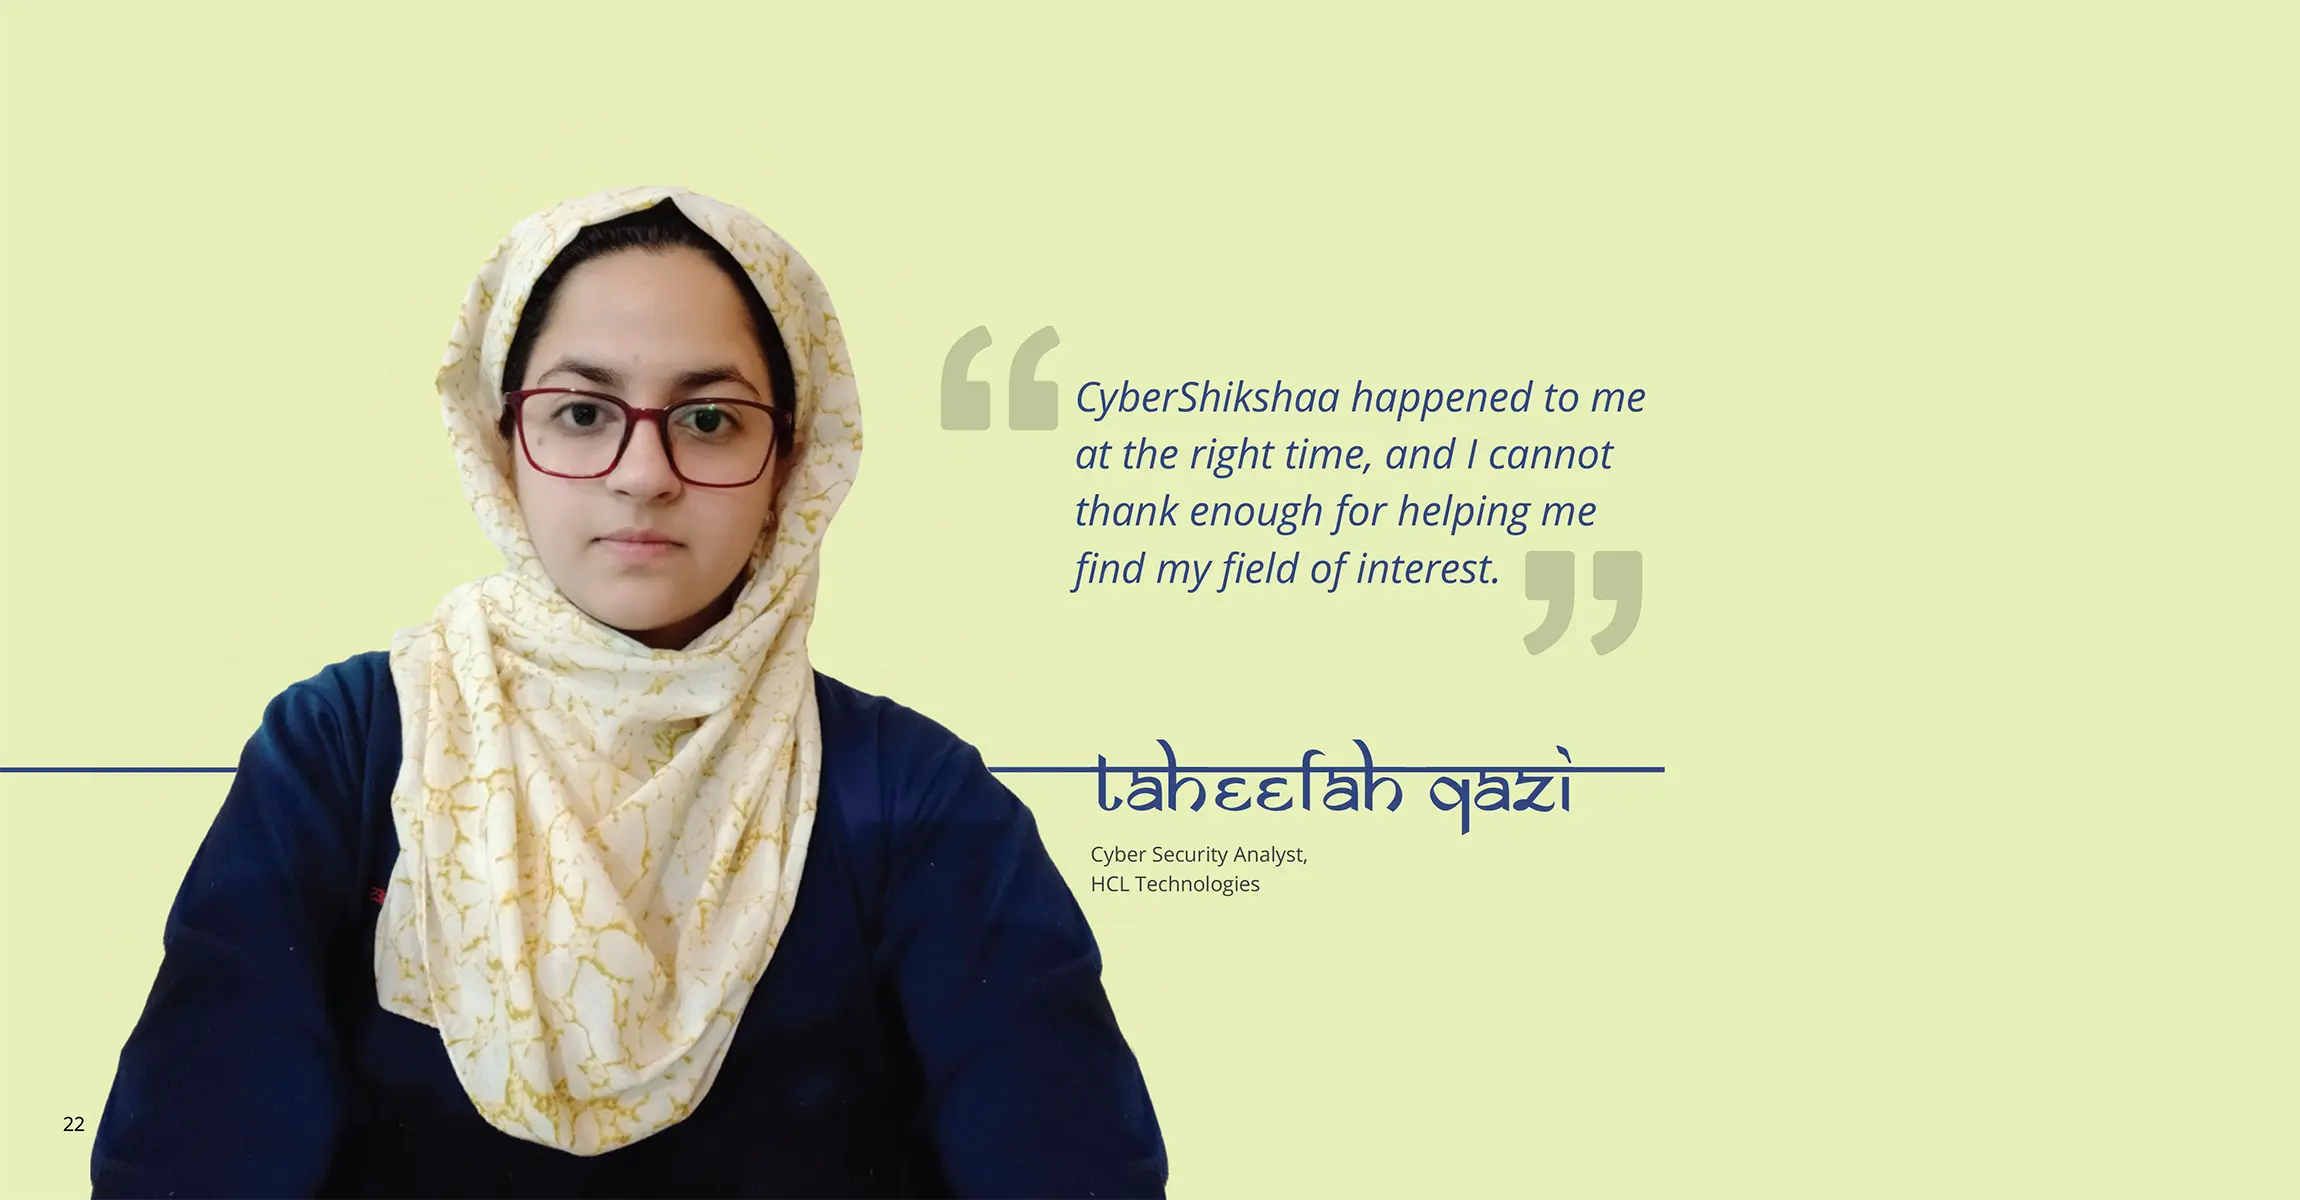 Taheefah Qazi - Success Story | CyberShikshaa